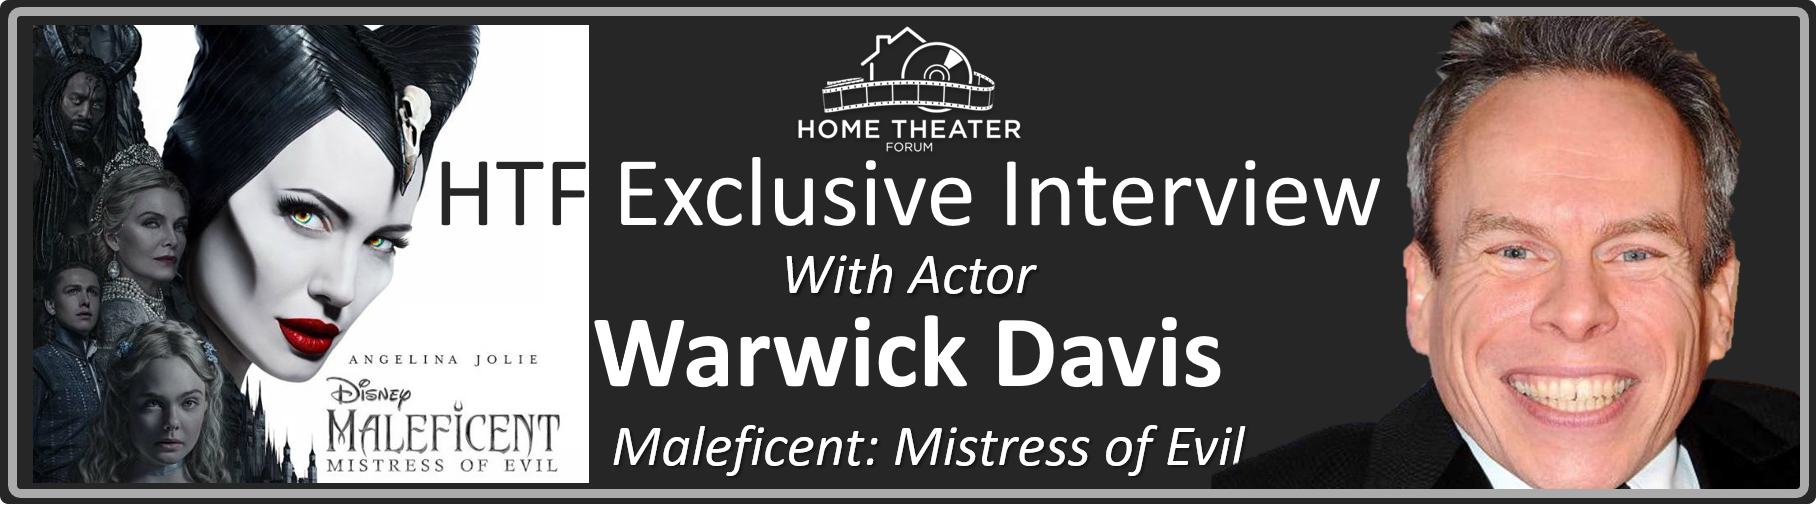 HTF Interview with Warwick Davis.png